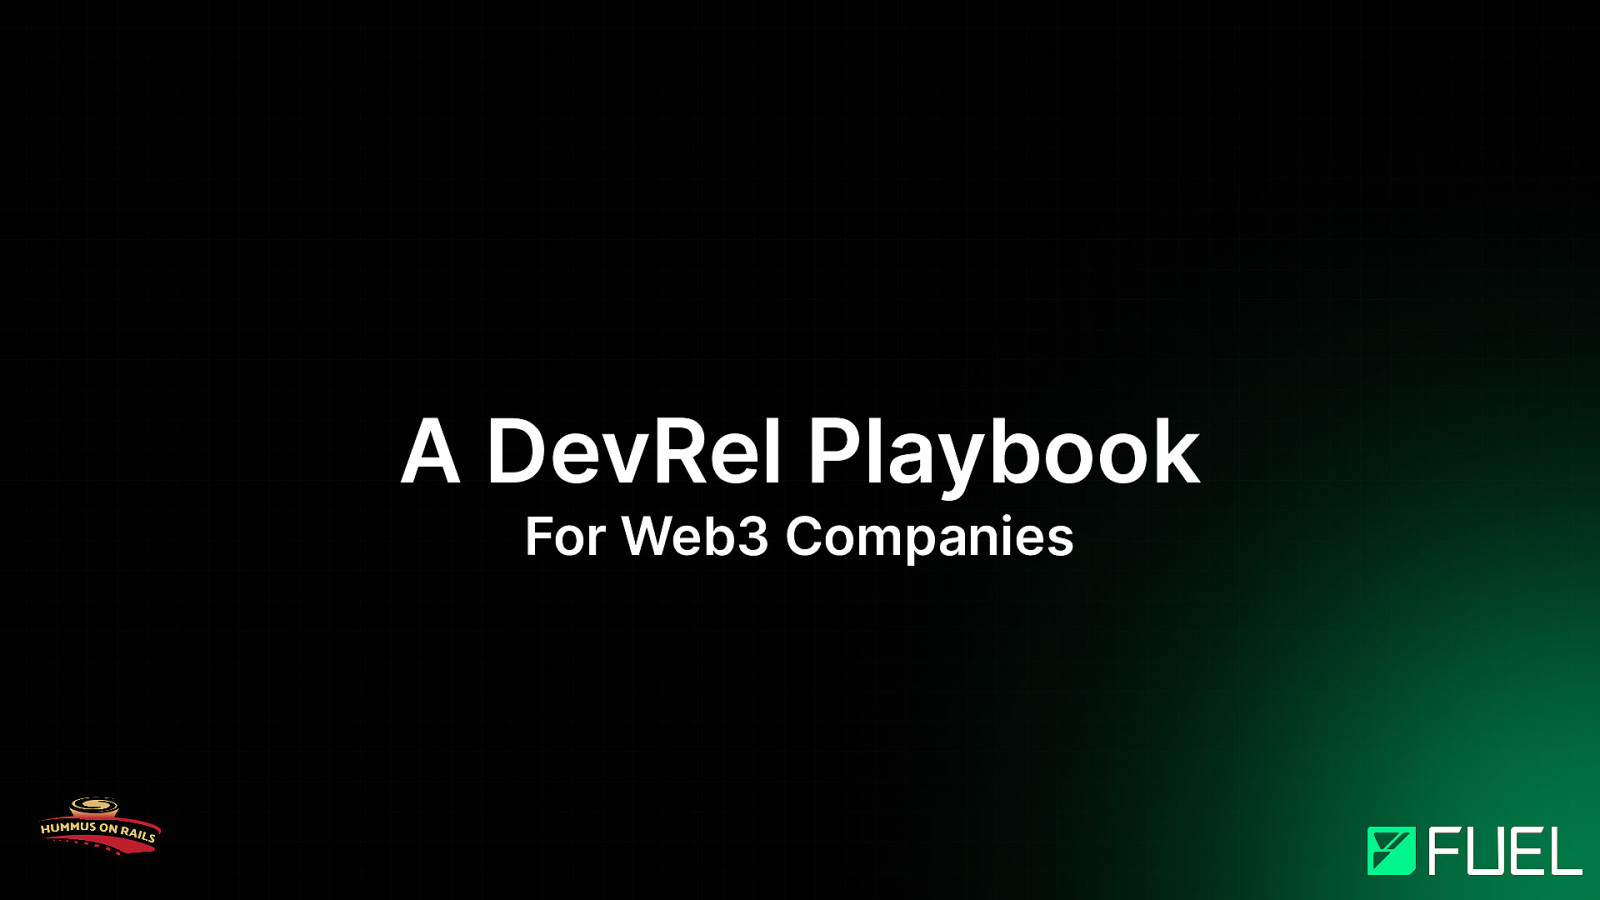 DevRel Playbook for Web3 Companies